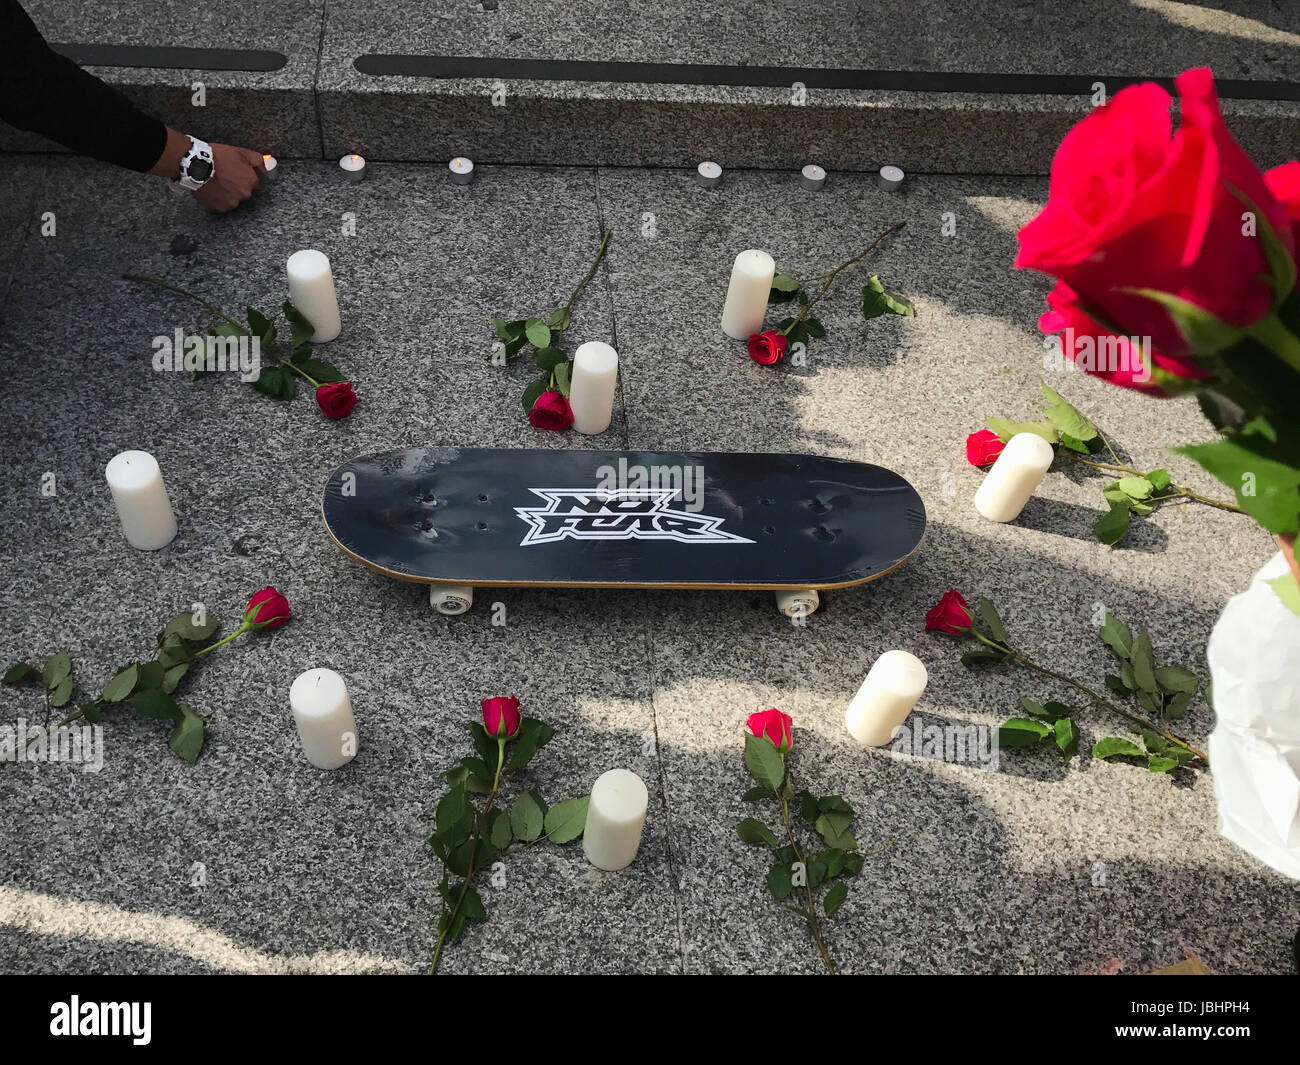 Spanish people gathered in Trafalgar Square to remember 39-year-old Ignacio Echeverria who died in the London Bridge terrorist attack. Stock Photo